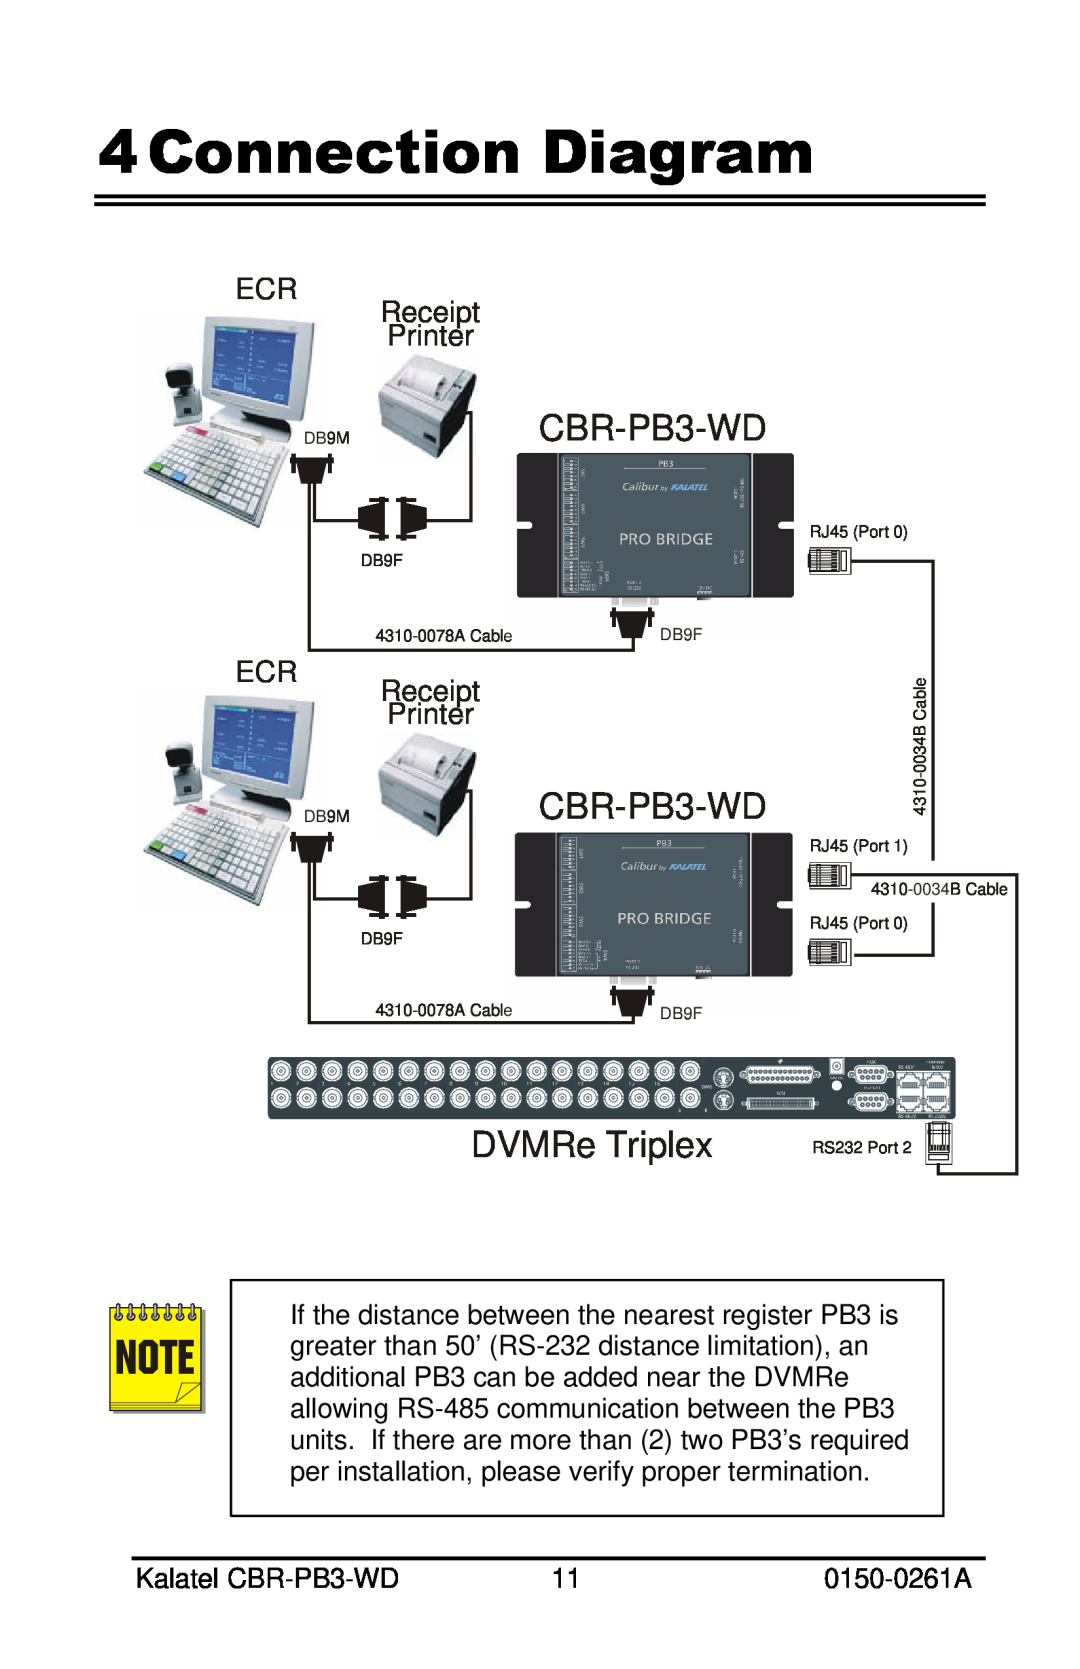 GE CBR-PB3-WD installation manual Connection Diagram, DVMRe Triplex, ECR Receipt Printer 